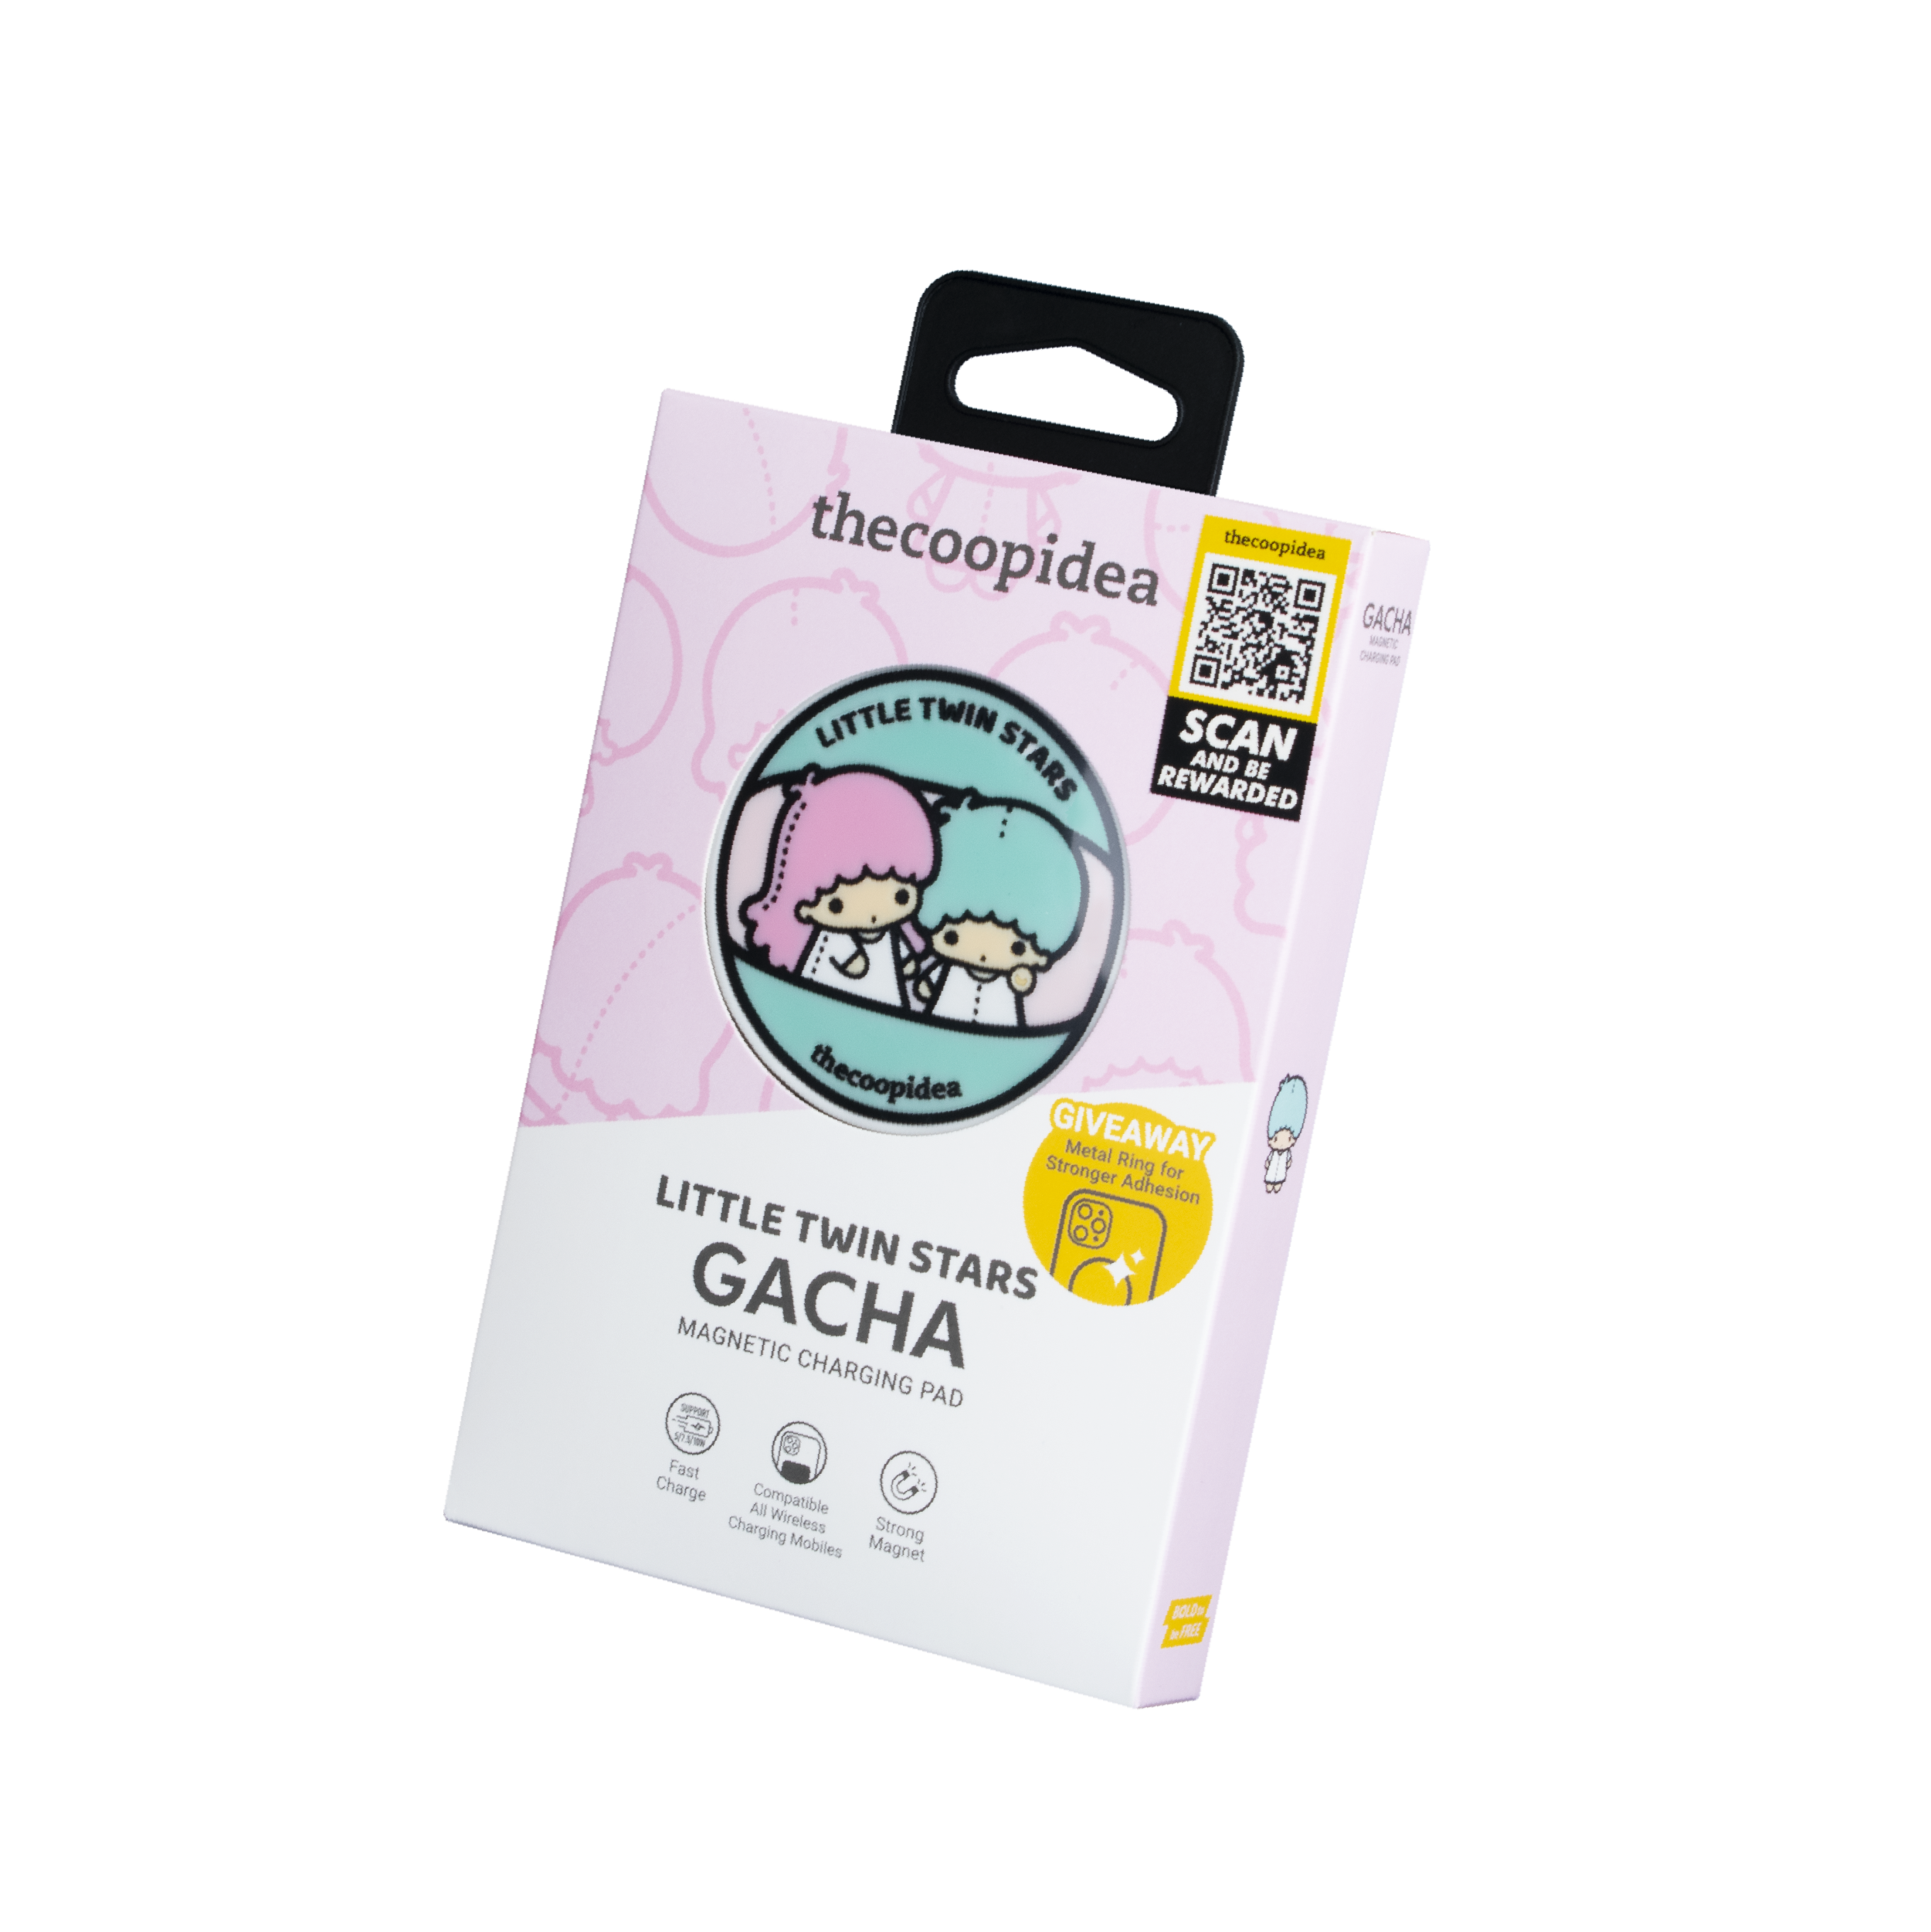 Sanrio GACHA Magnetic Charging Pad - Little Twin Stars